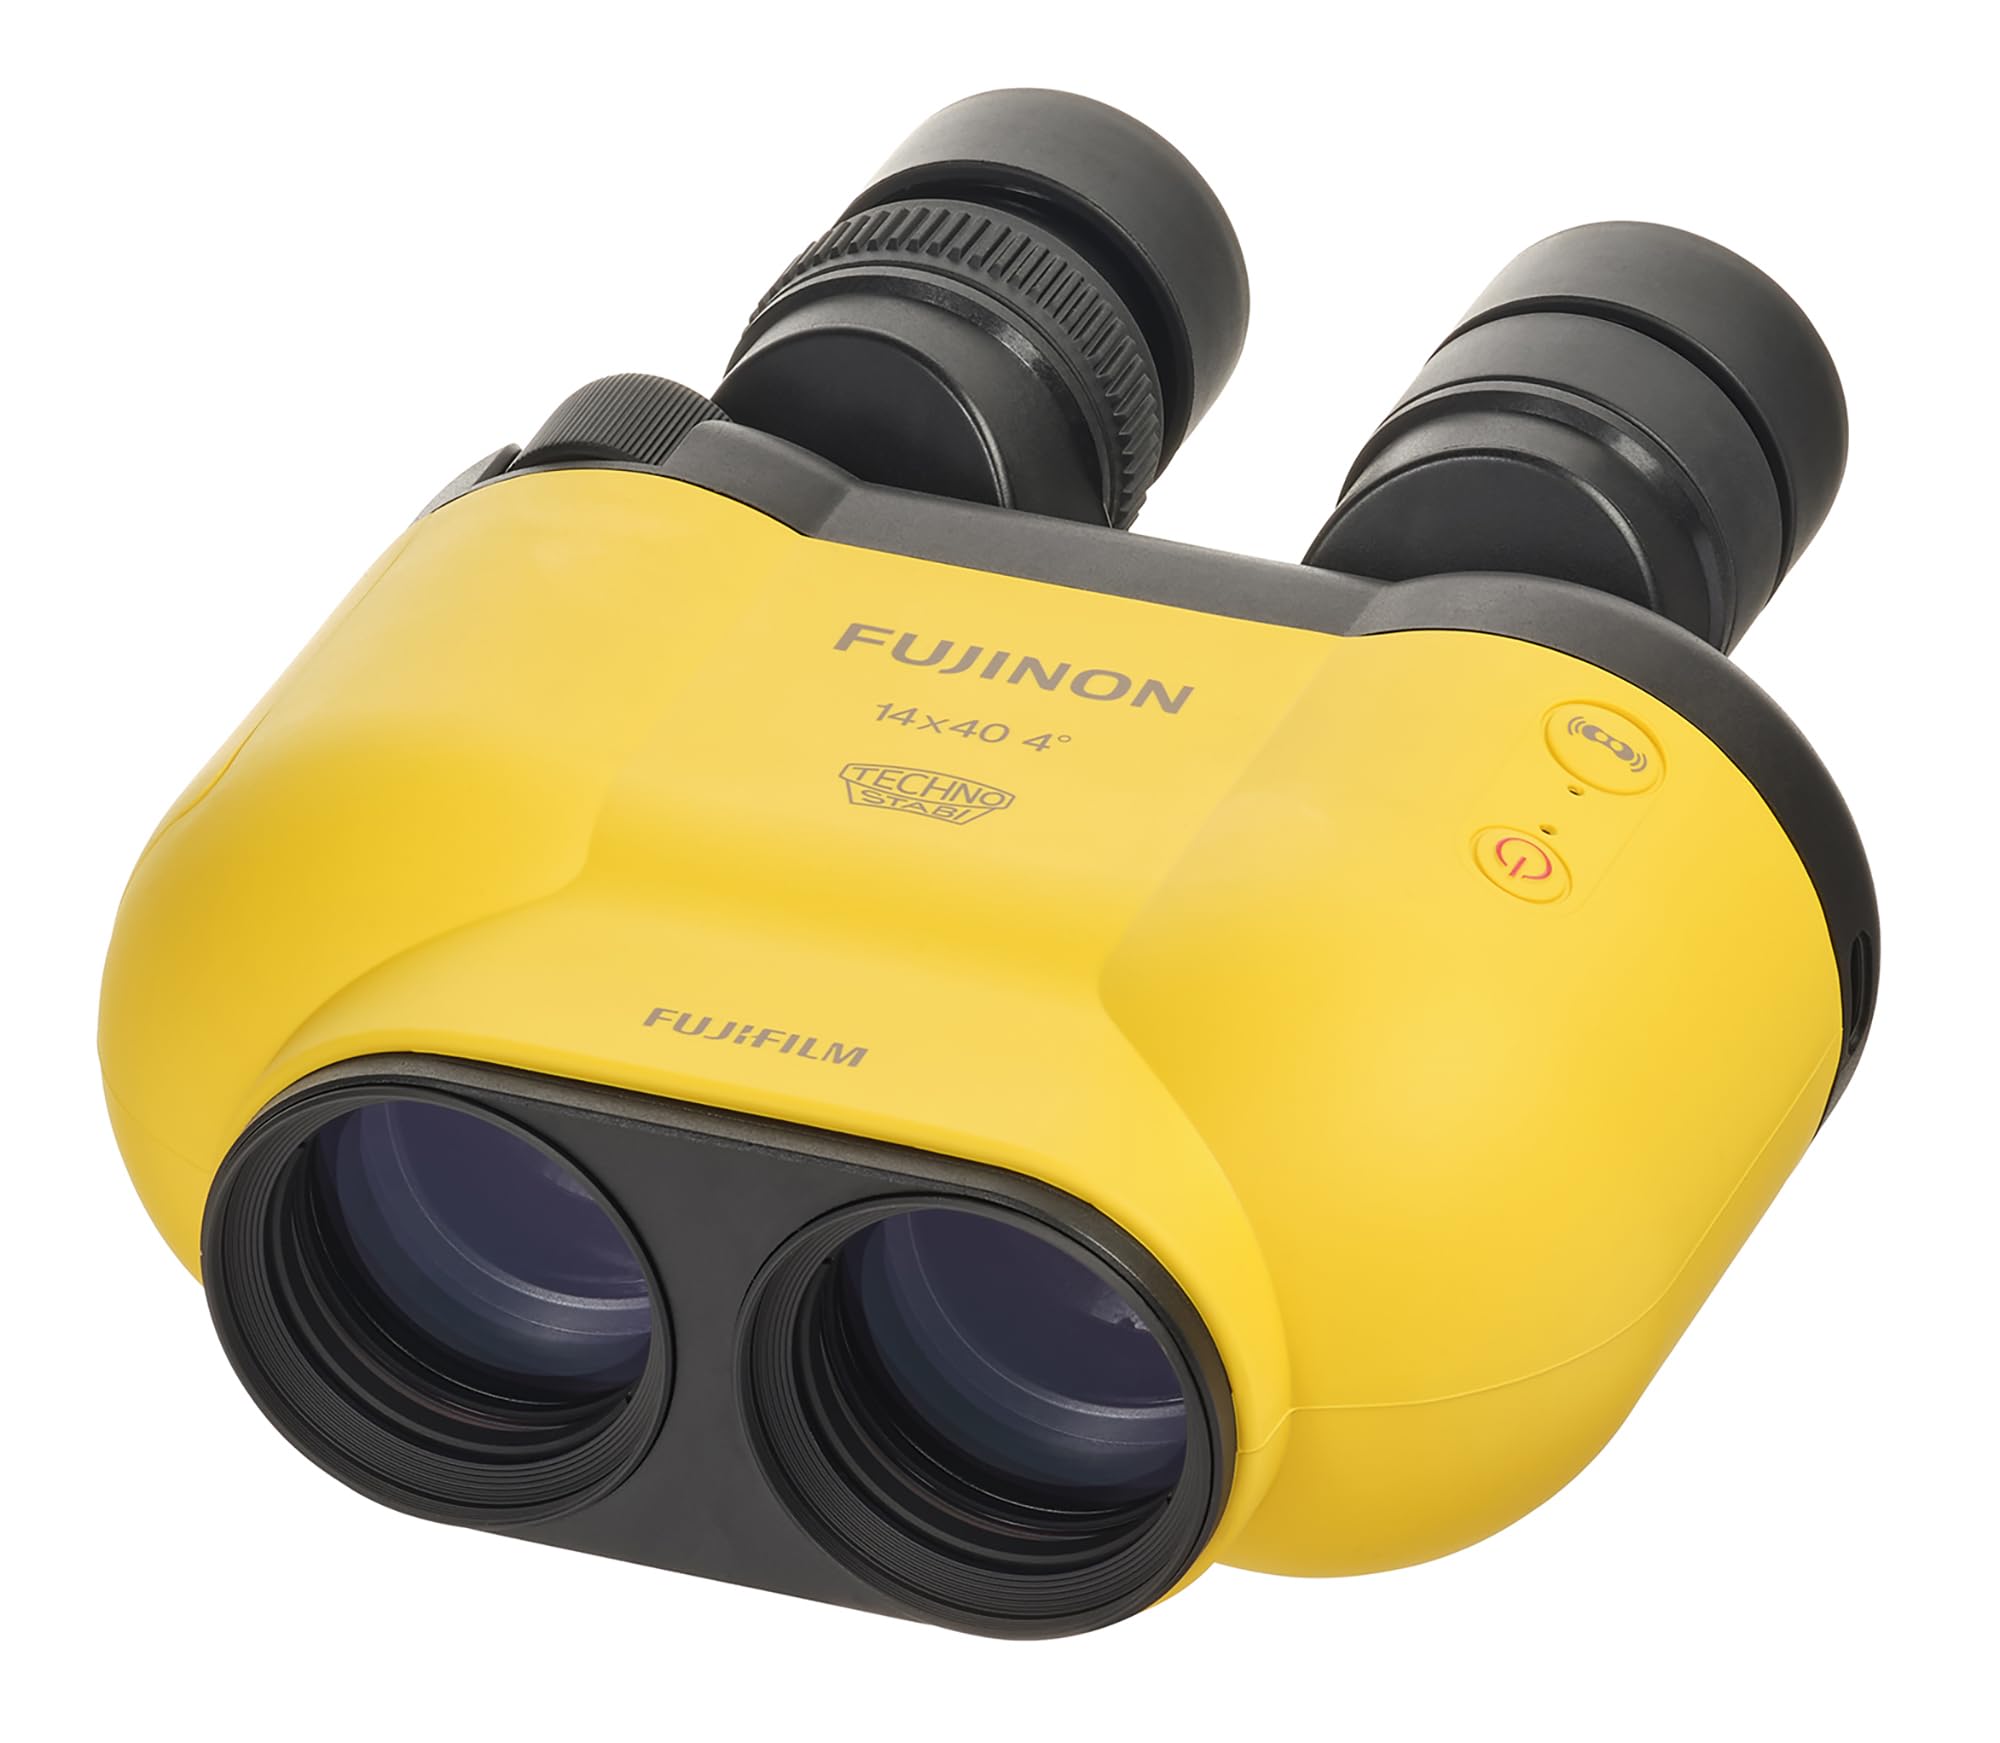 Fujinon Techno-Stabi TS-X 14x40 Image Stabilization Binocular - Yellow